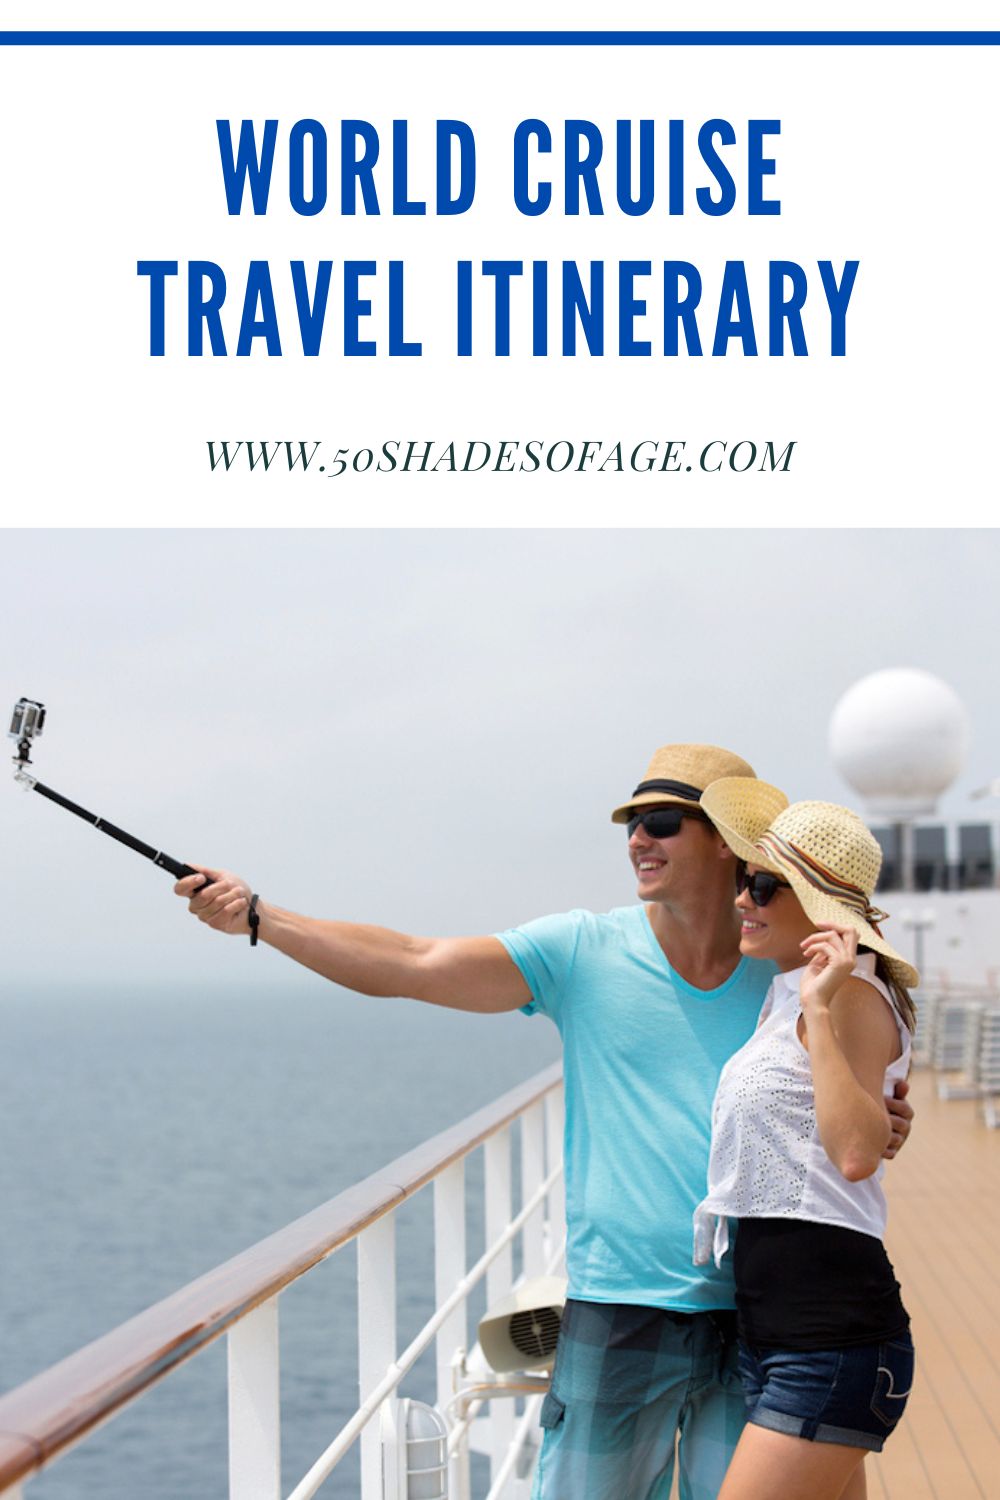 World Cruise Travel Itinerary